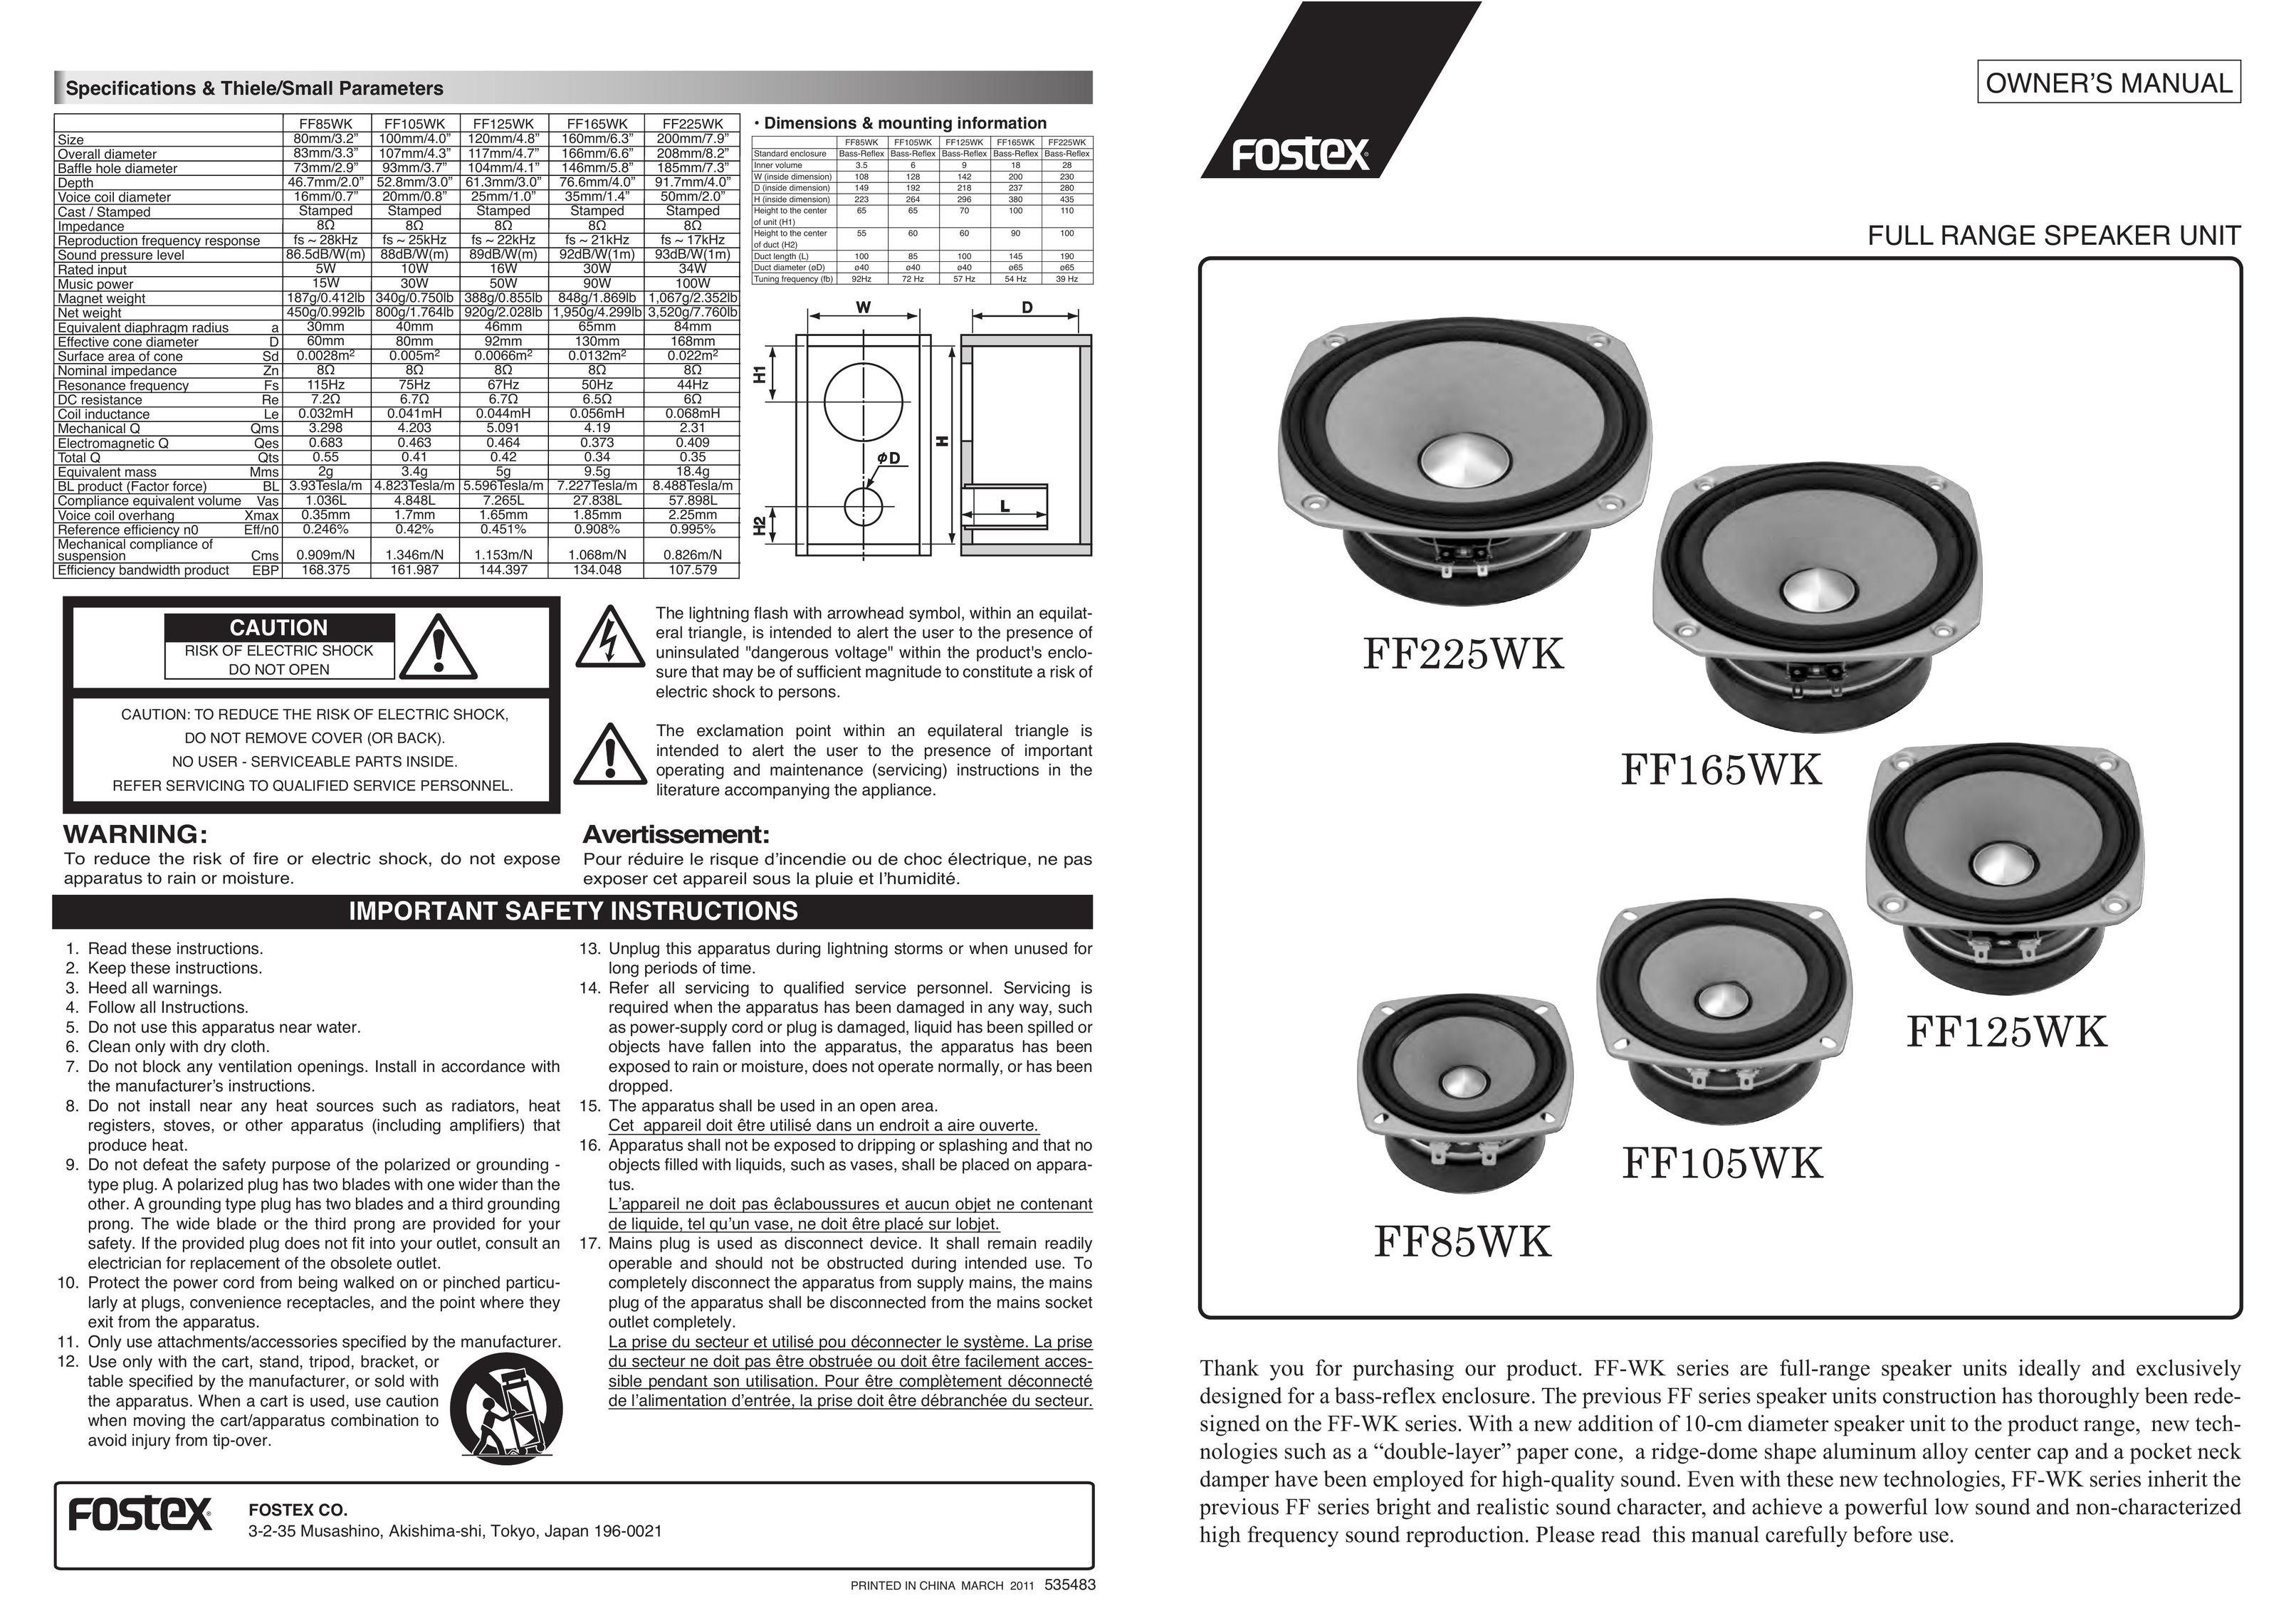 Fostex FF225WK Car Speaker User Manual